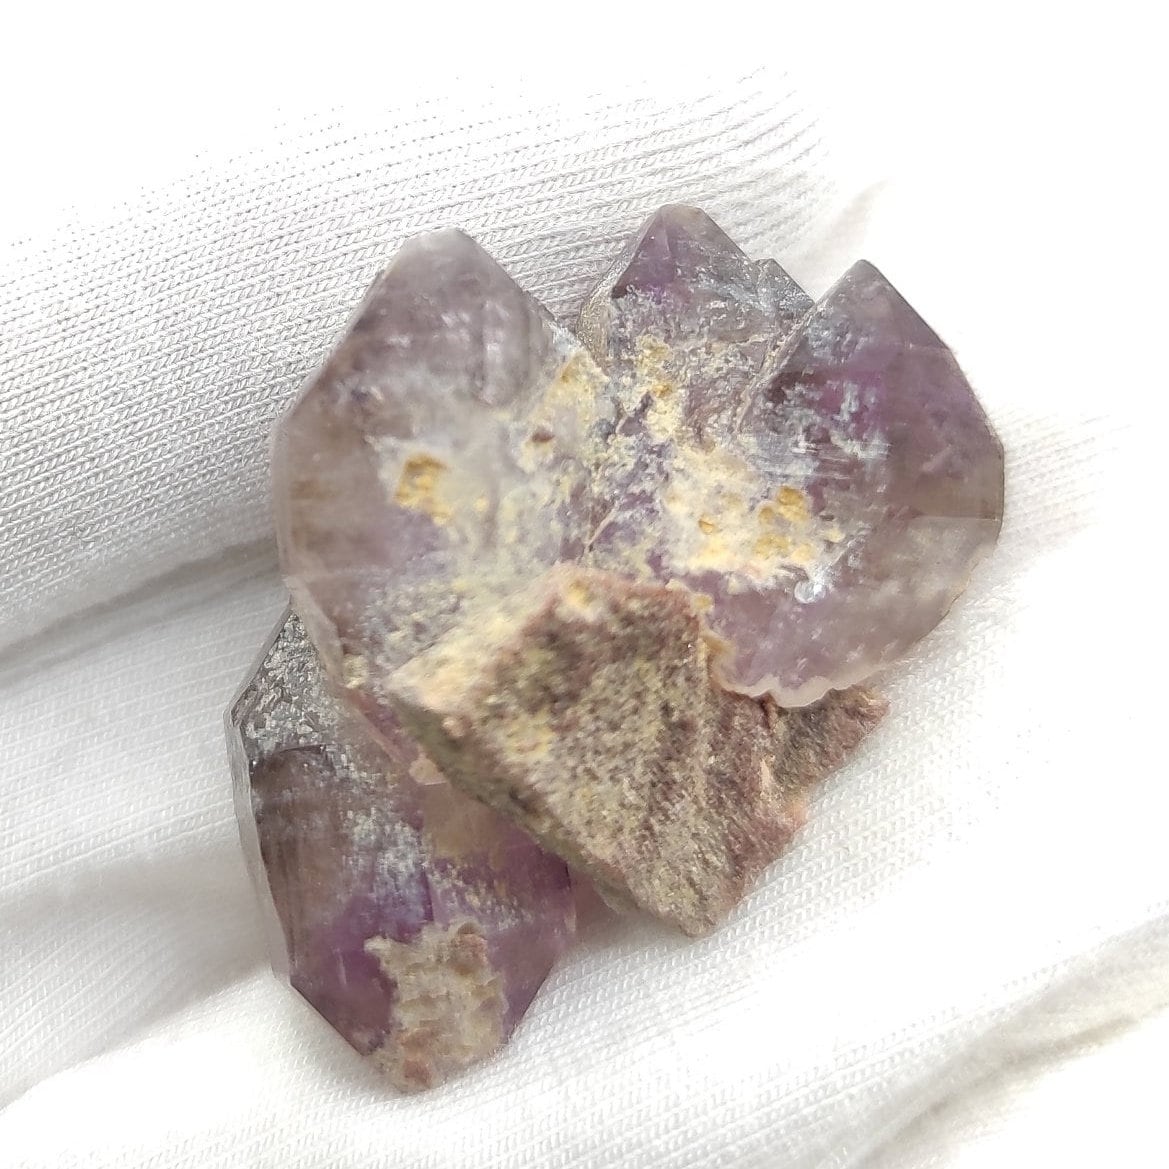 11.39g Double Terminated Amethyst from Kazakhstan - DT Purple Amethyst Crystal - Lake Balkhash, Kazakhstan - Natural Mineral Specimen